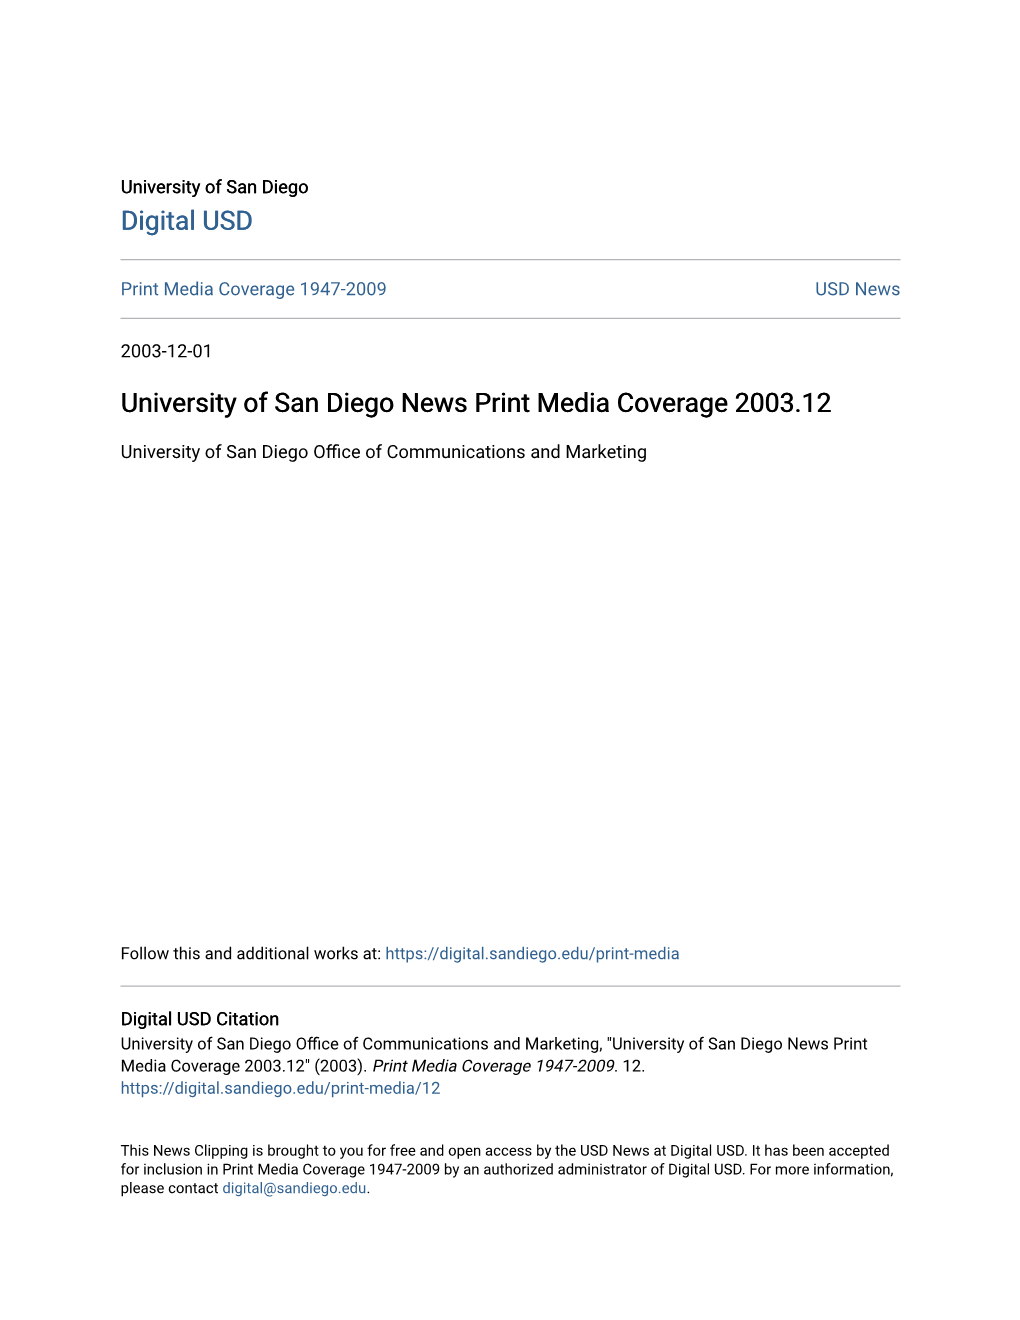 University of San Diego News Print Media Coverage 2003.12